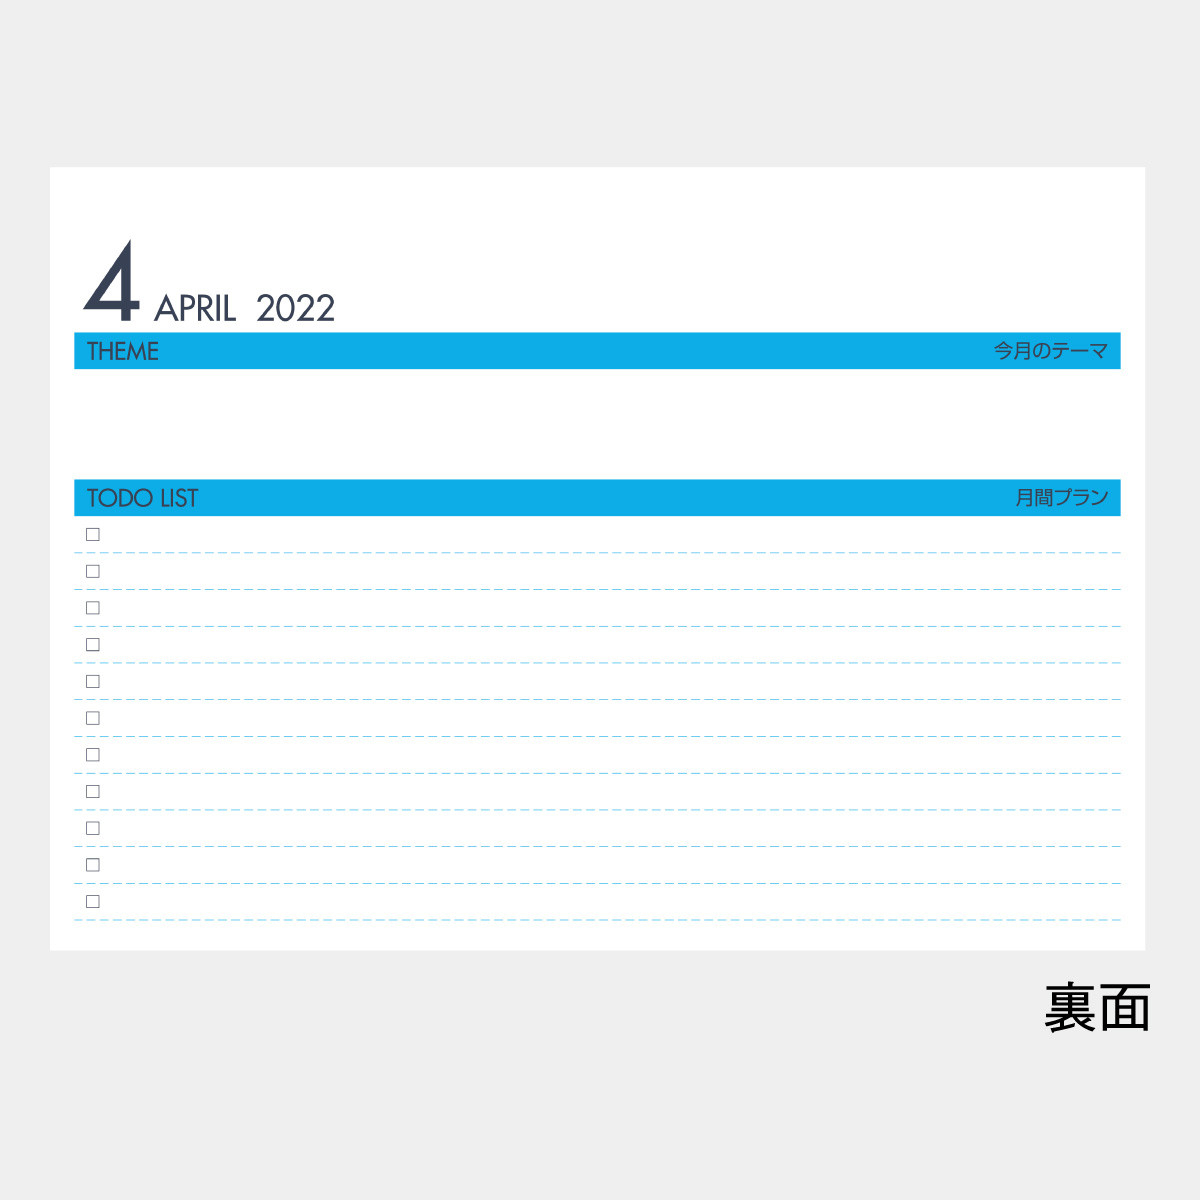 Sg-925 Desk Calendar 2022年版の名入れカレンダーを格安で販売｜名入れカレンダー印刷  Chanel Advent Calendar 2022 Singapore